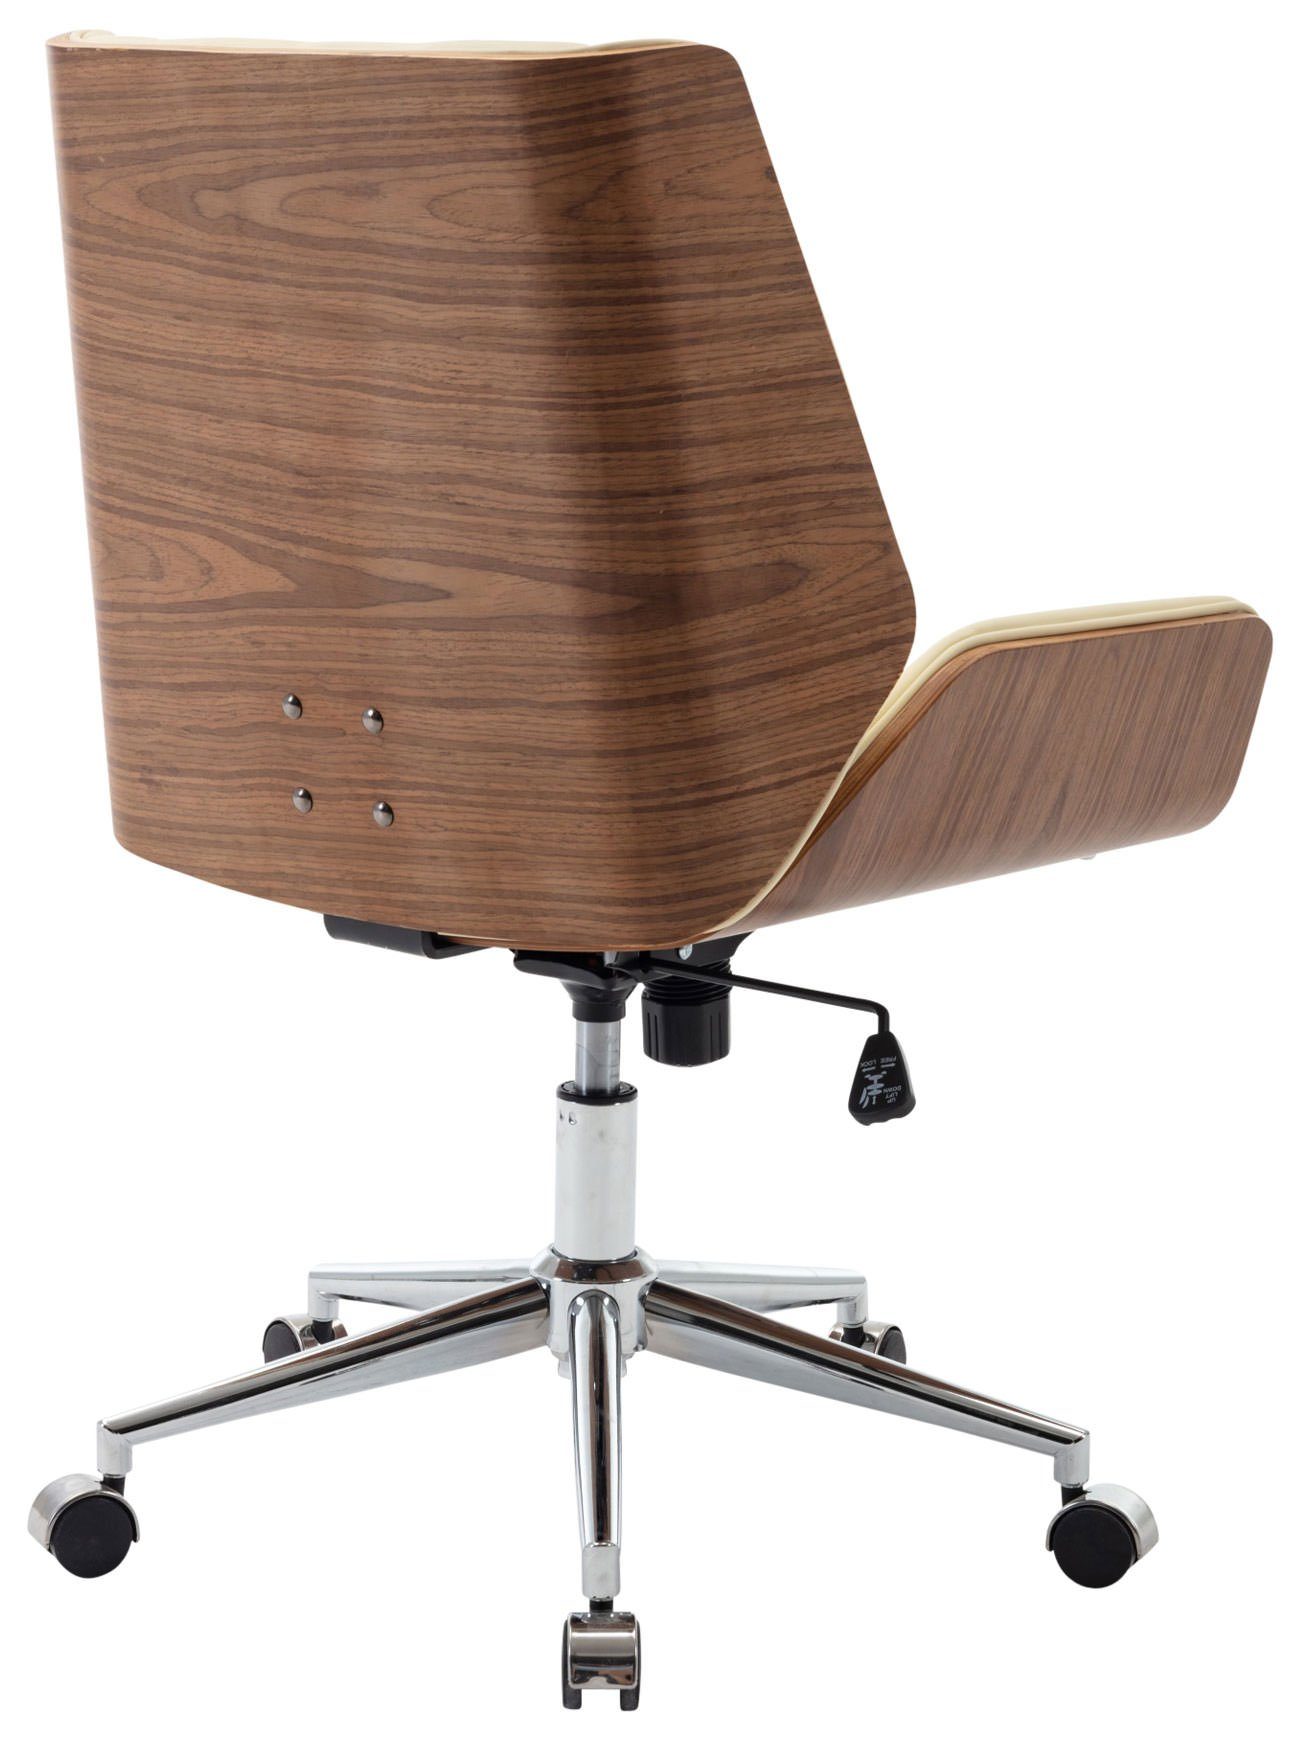 Schreibtischstuhl Holzsitzschale walnuss/creme Kunstleder, Zwolle Bürosessel, CLP